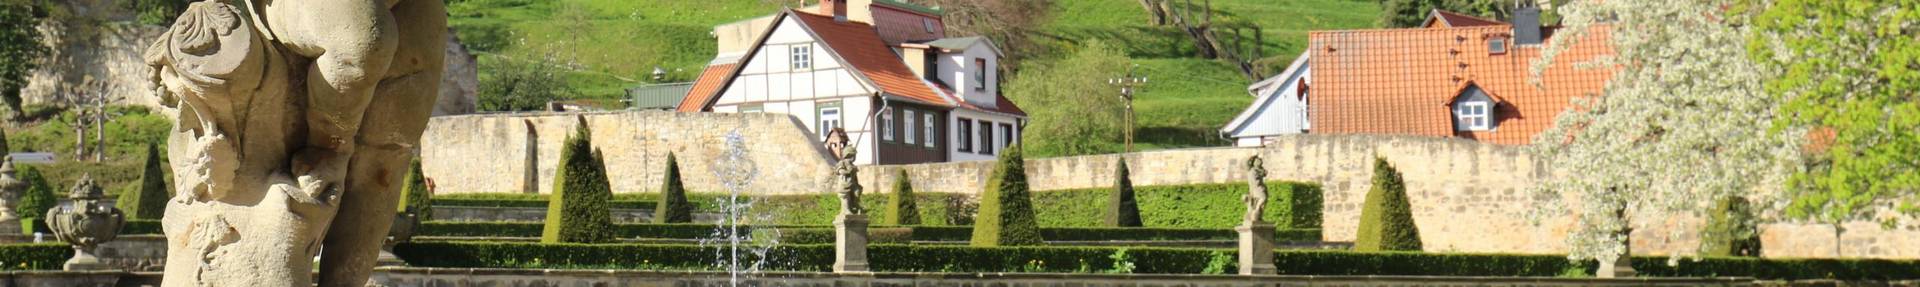 Blick in den Barockgarten vom Schloss Blankenburg